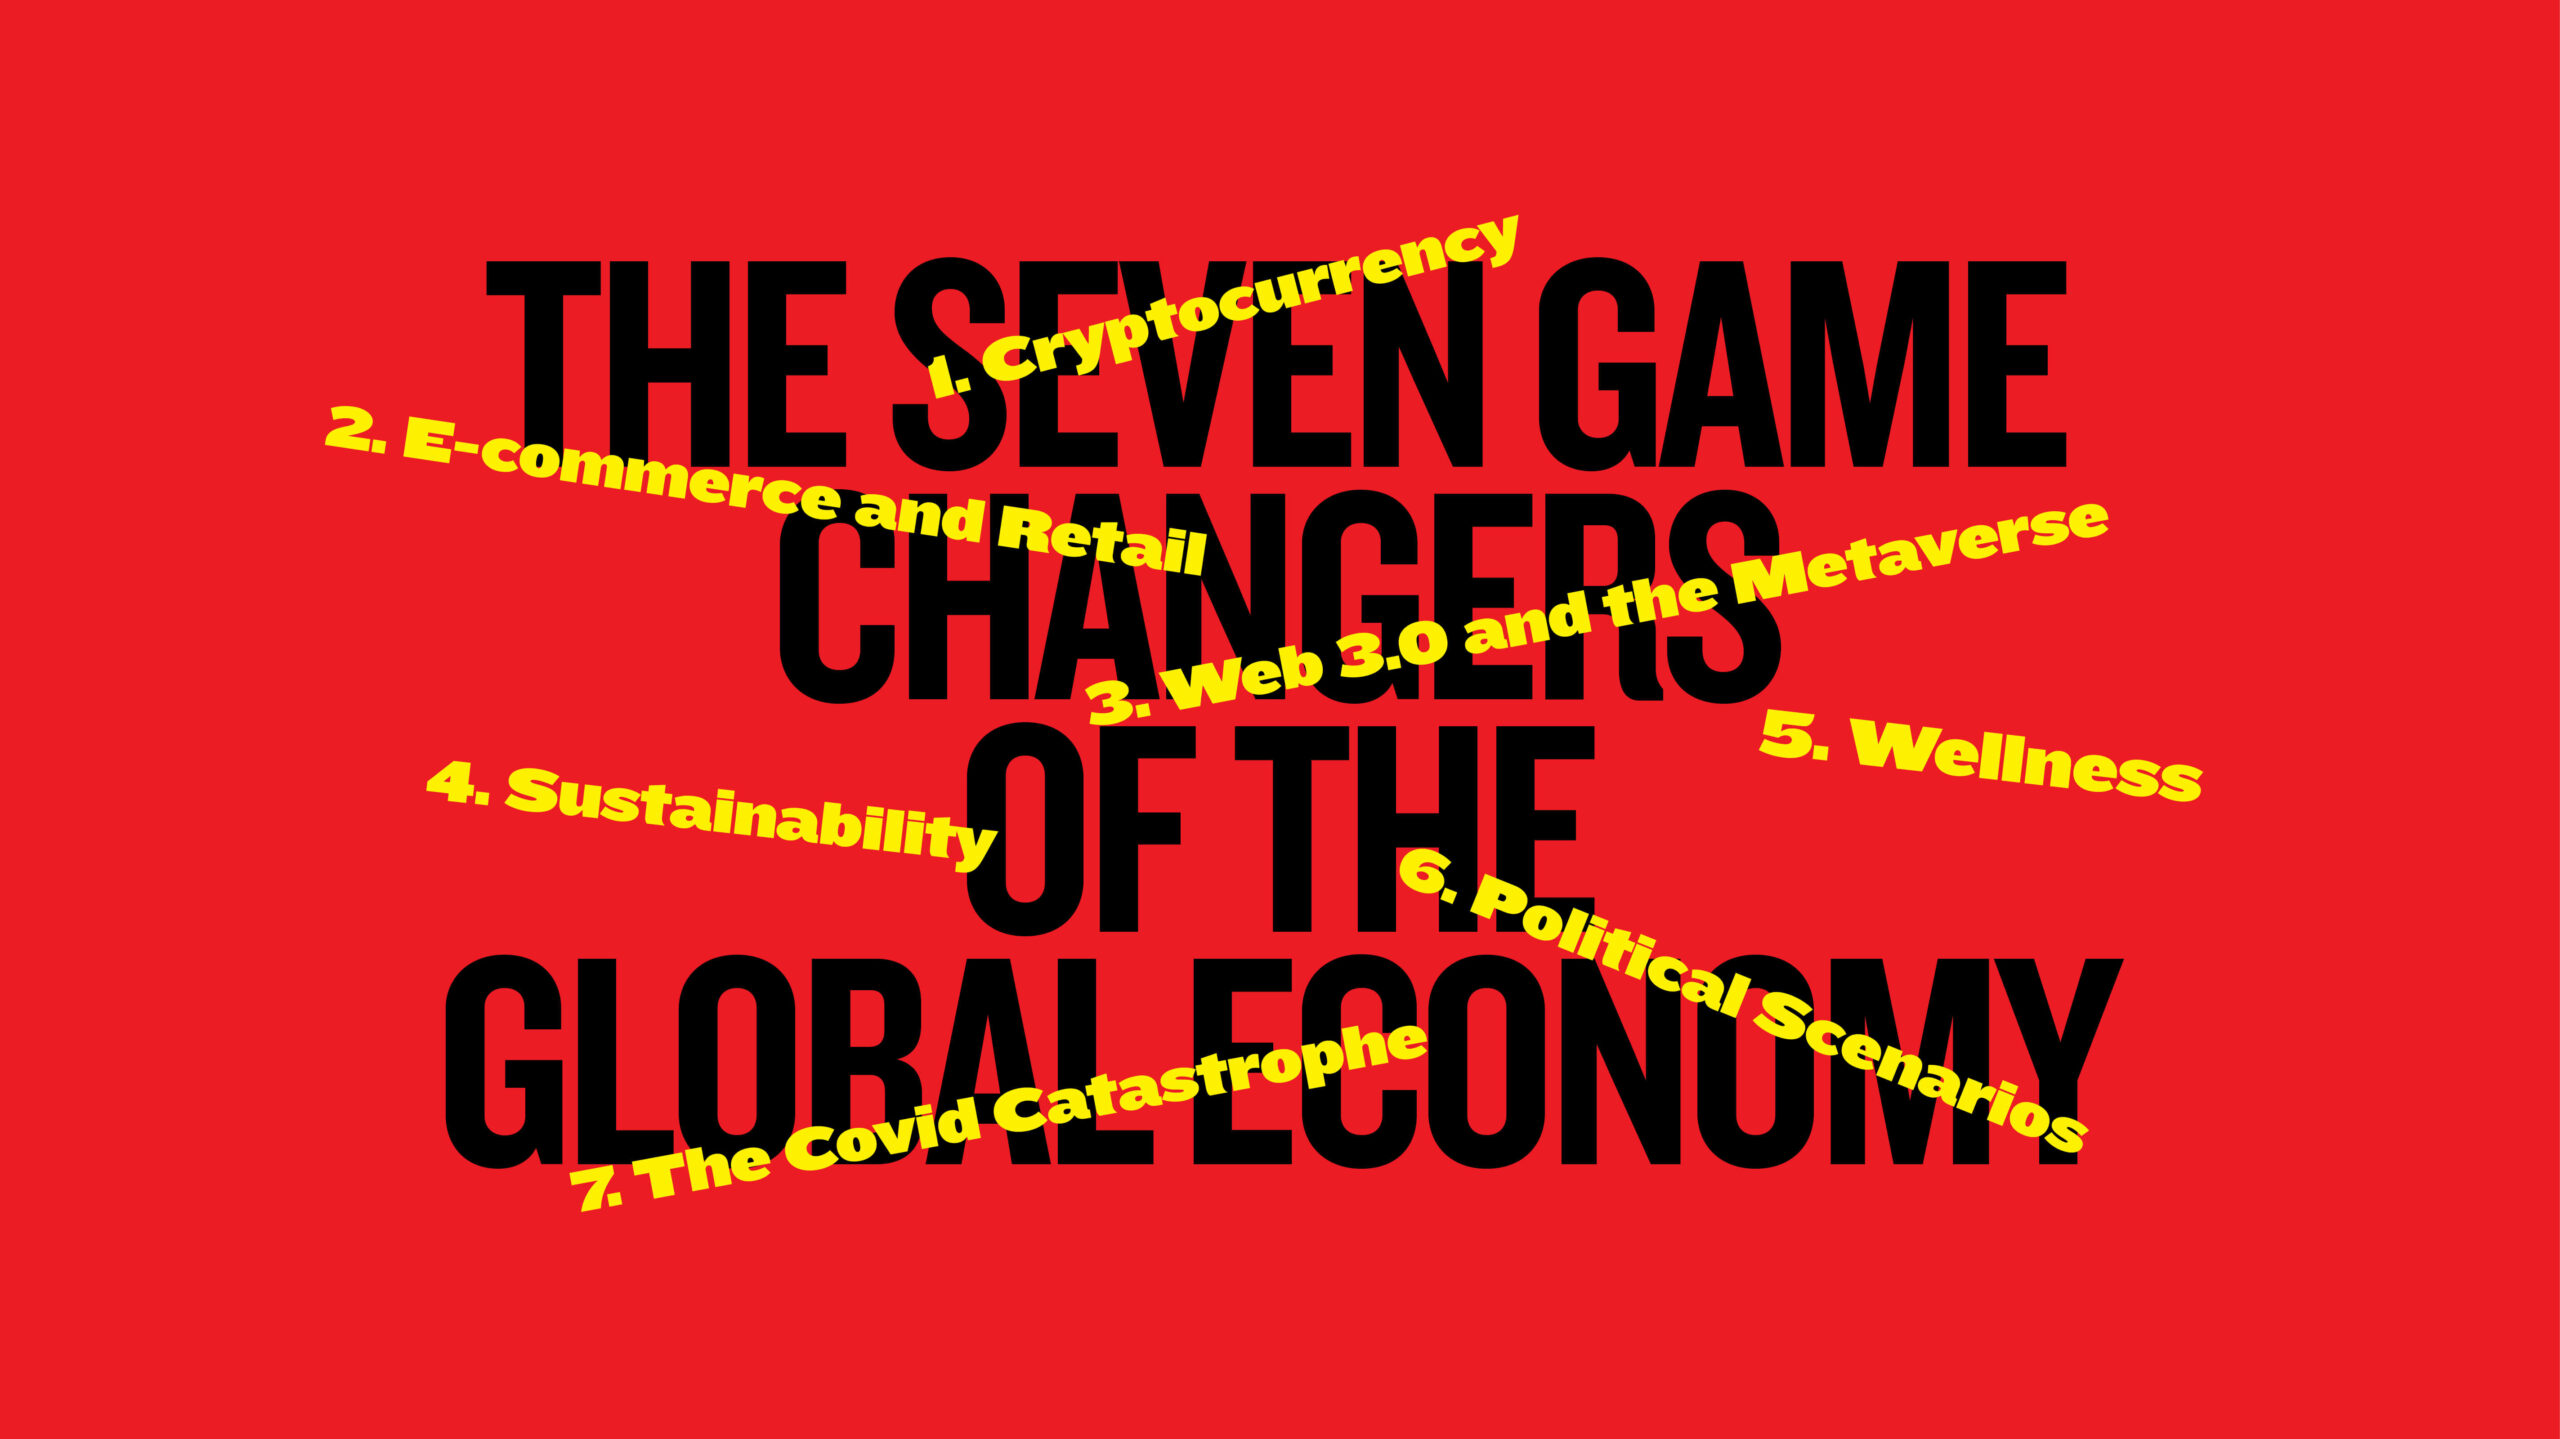 Global Economy Game Changers